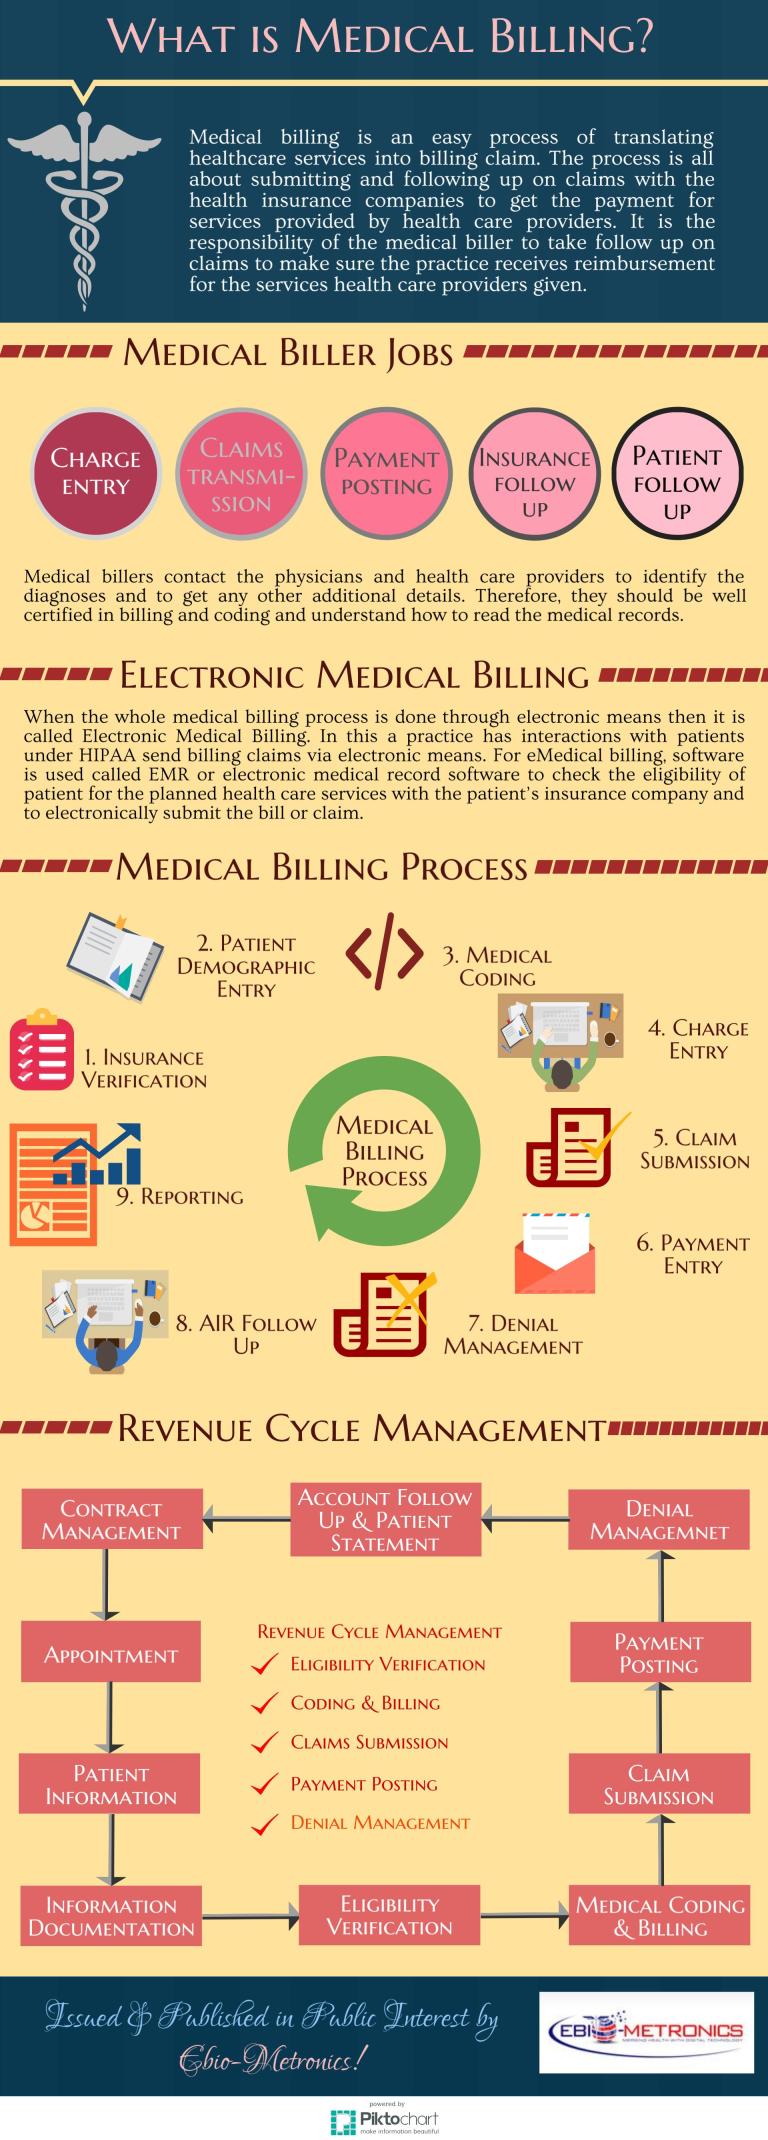 medical-billing-and-its-process-ebio-medical-billing